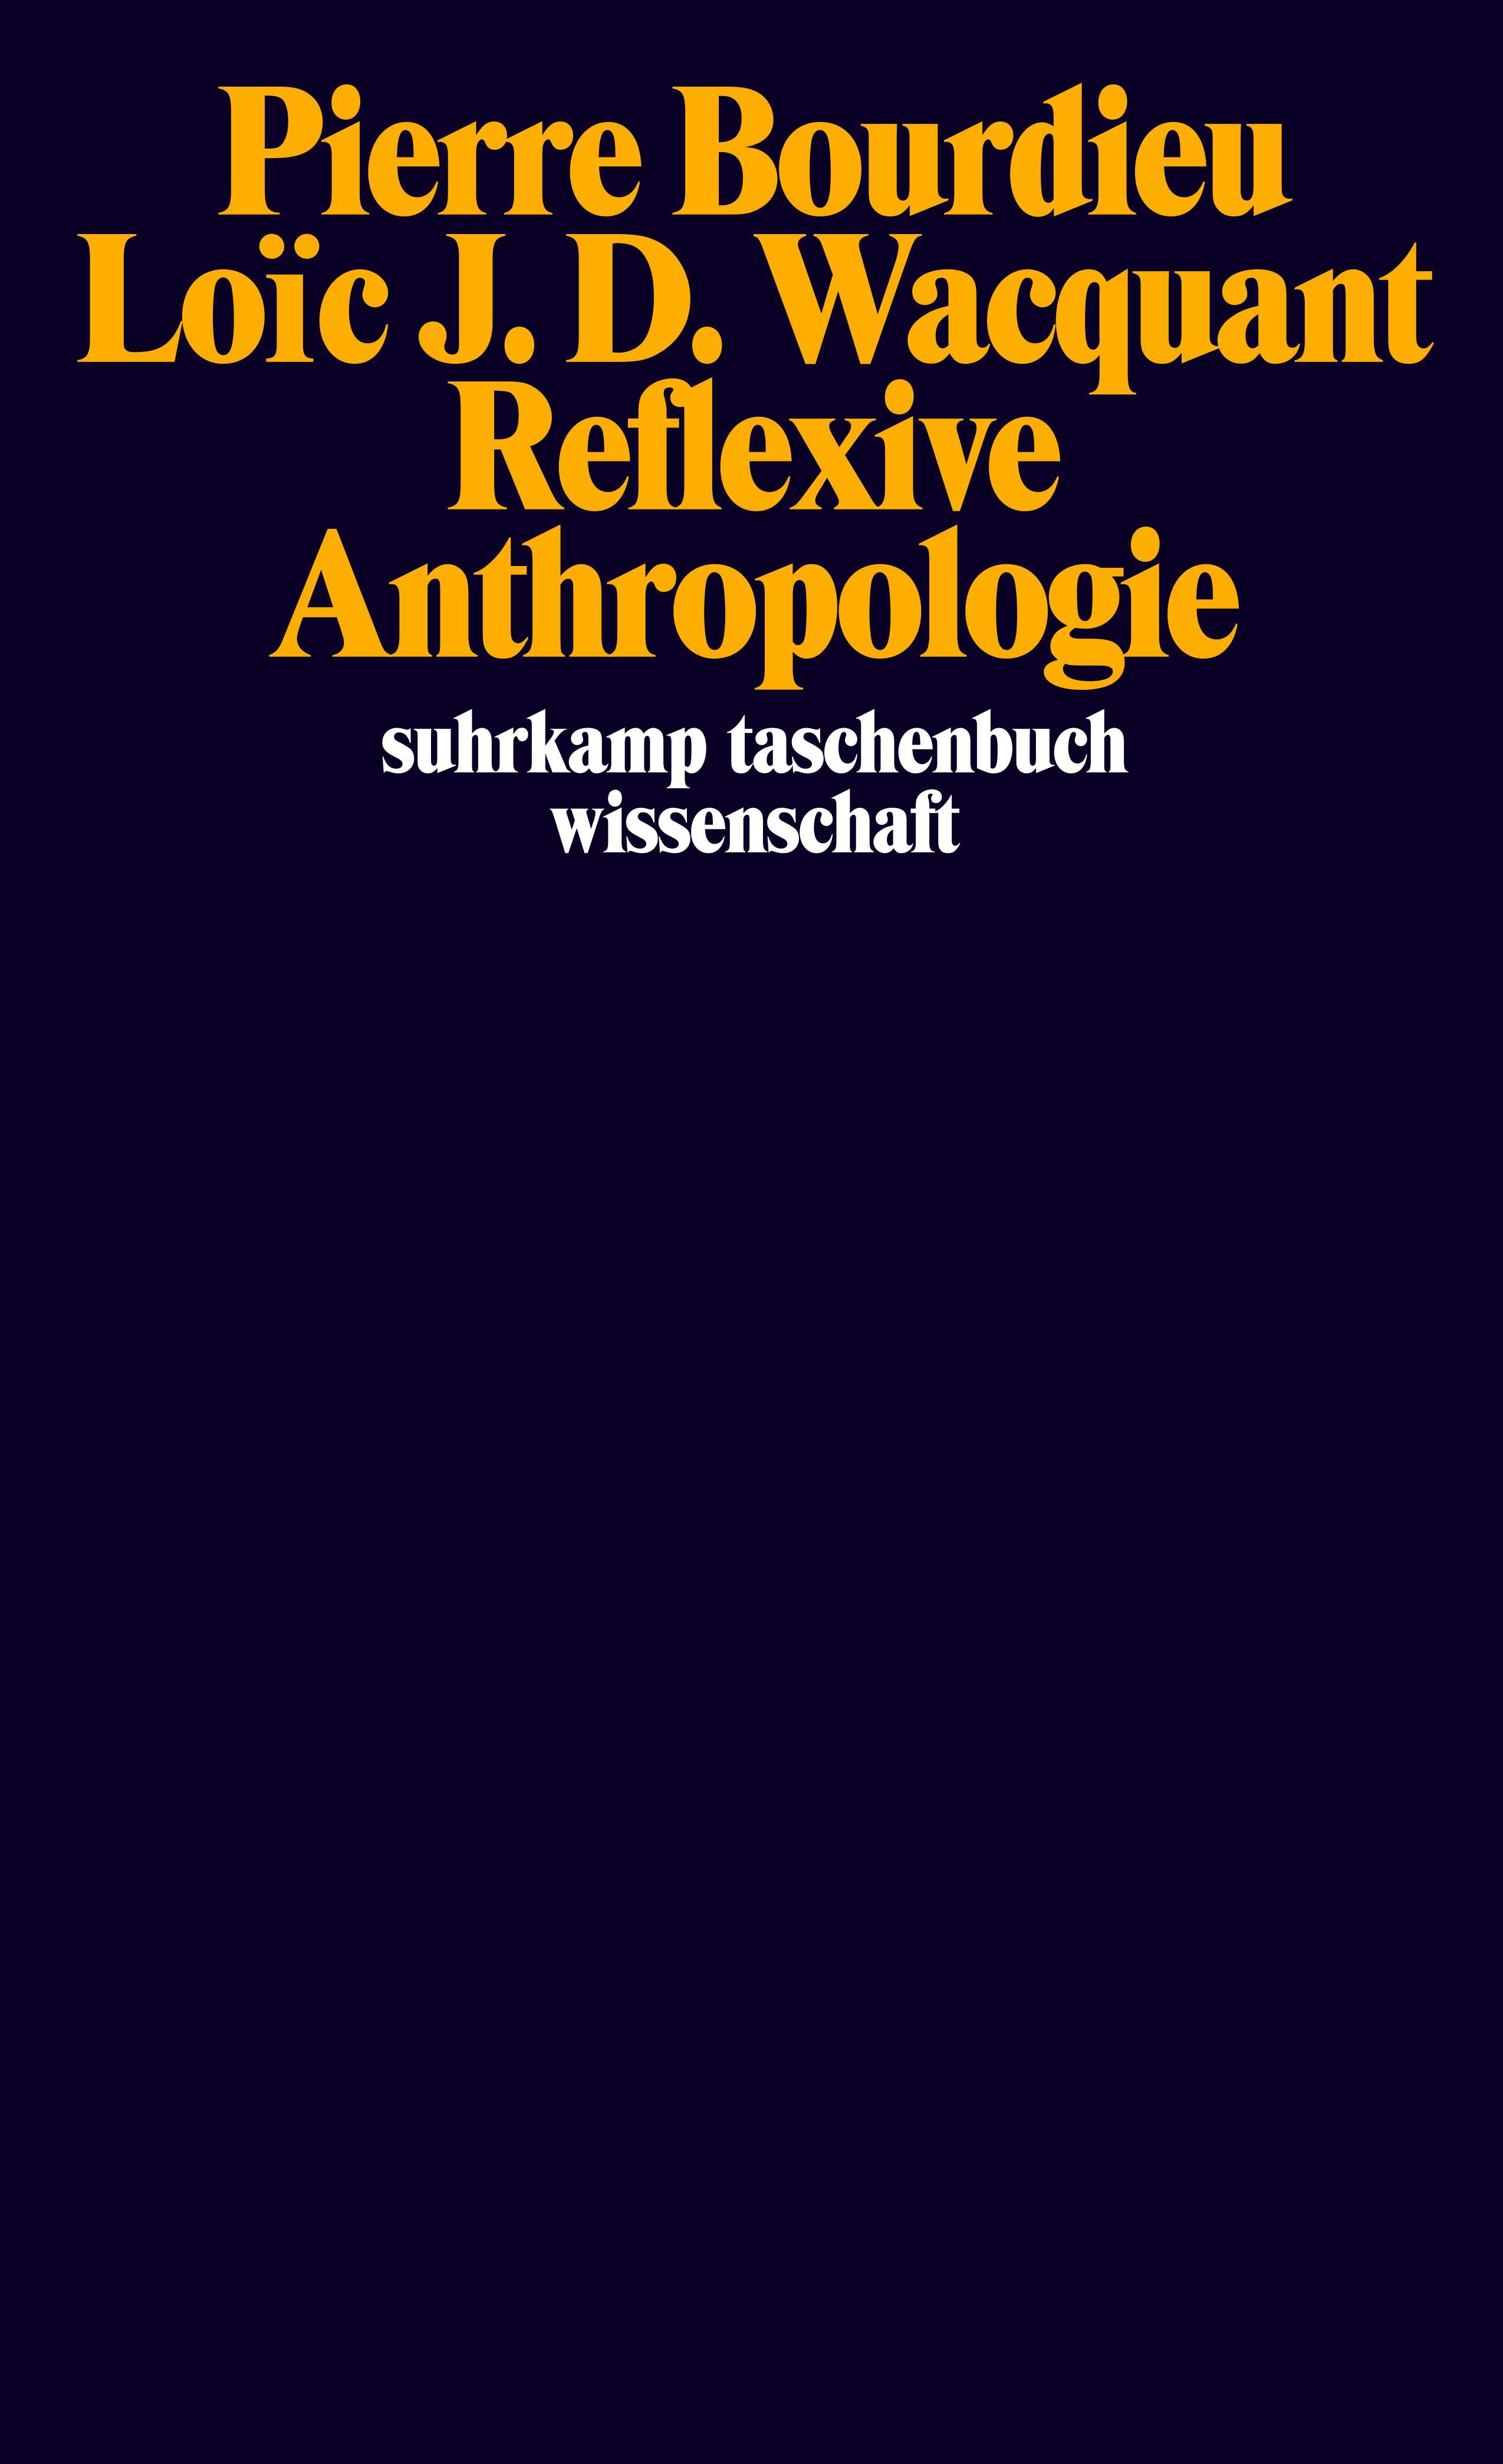 Frankfurter Adorno-Vorlesung 